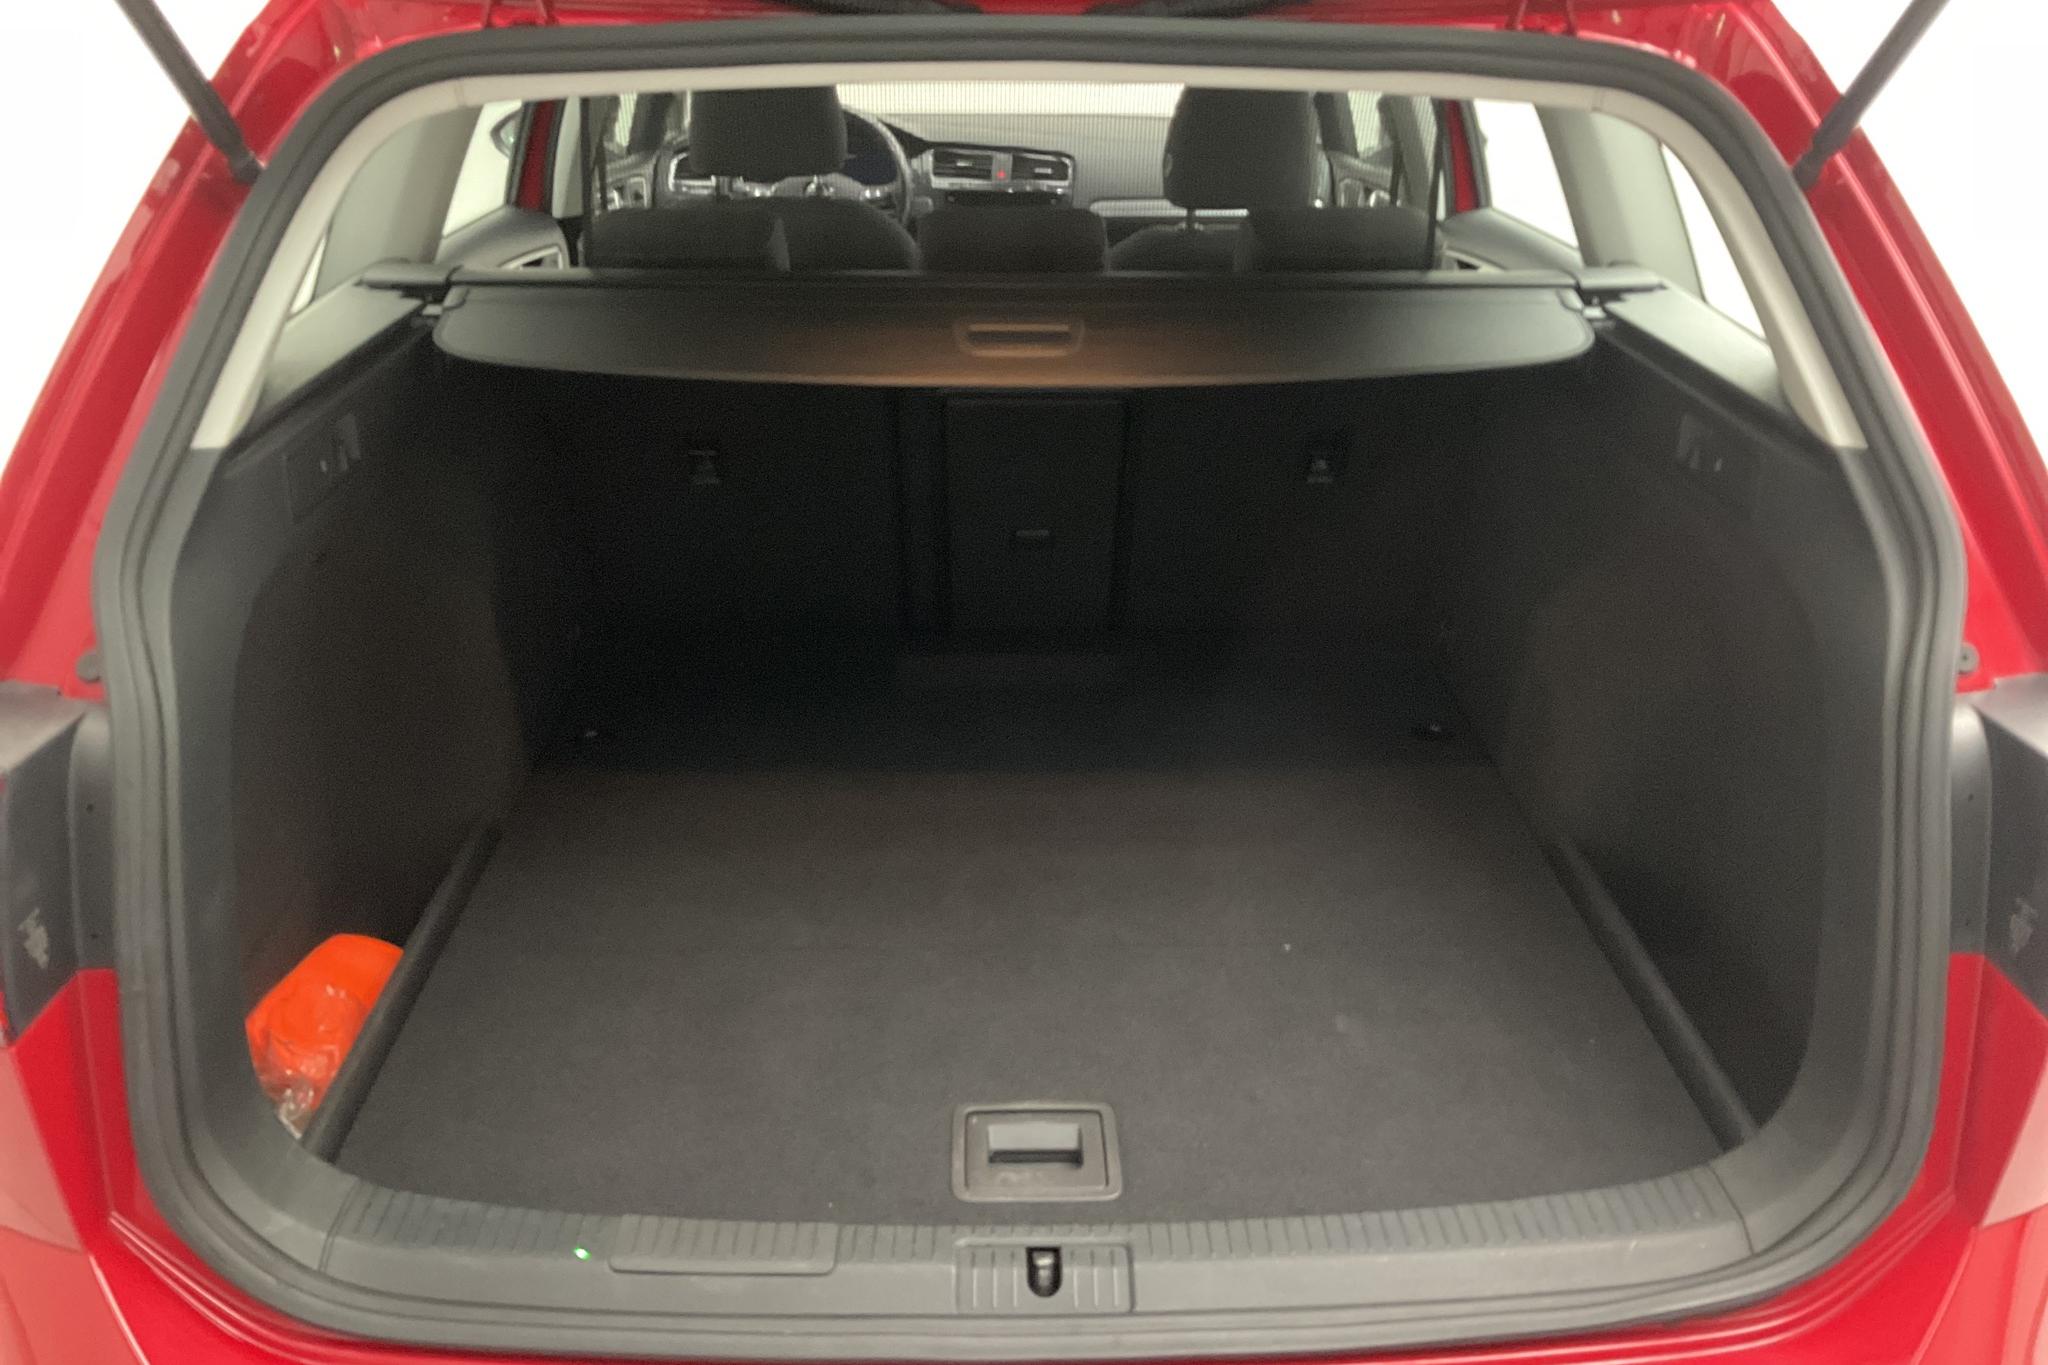 VW Golf Alltrack 2.0 TDI 4MOTION (184hk) - 83 580 km - Automatic - red - 2019